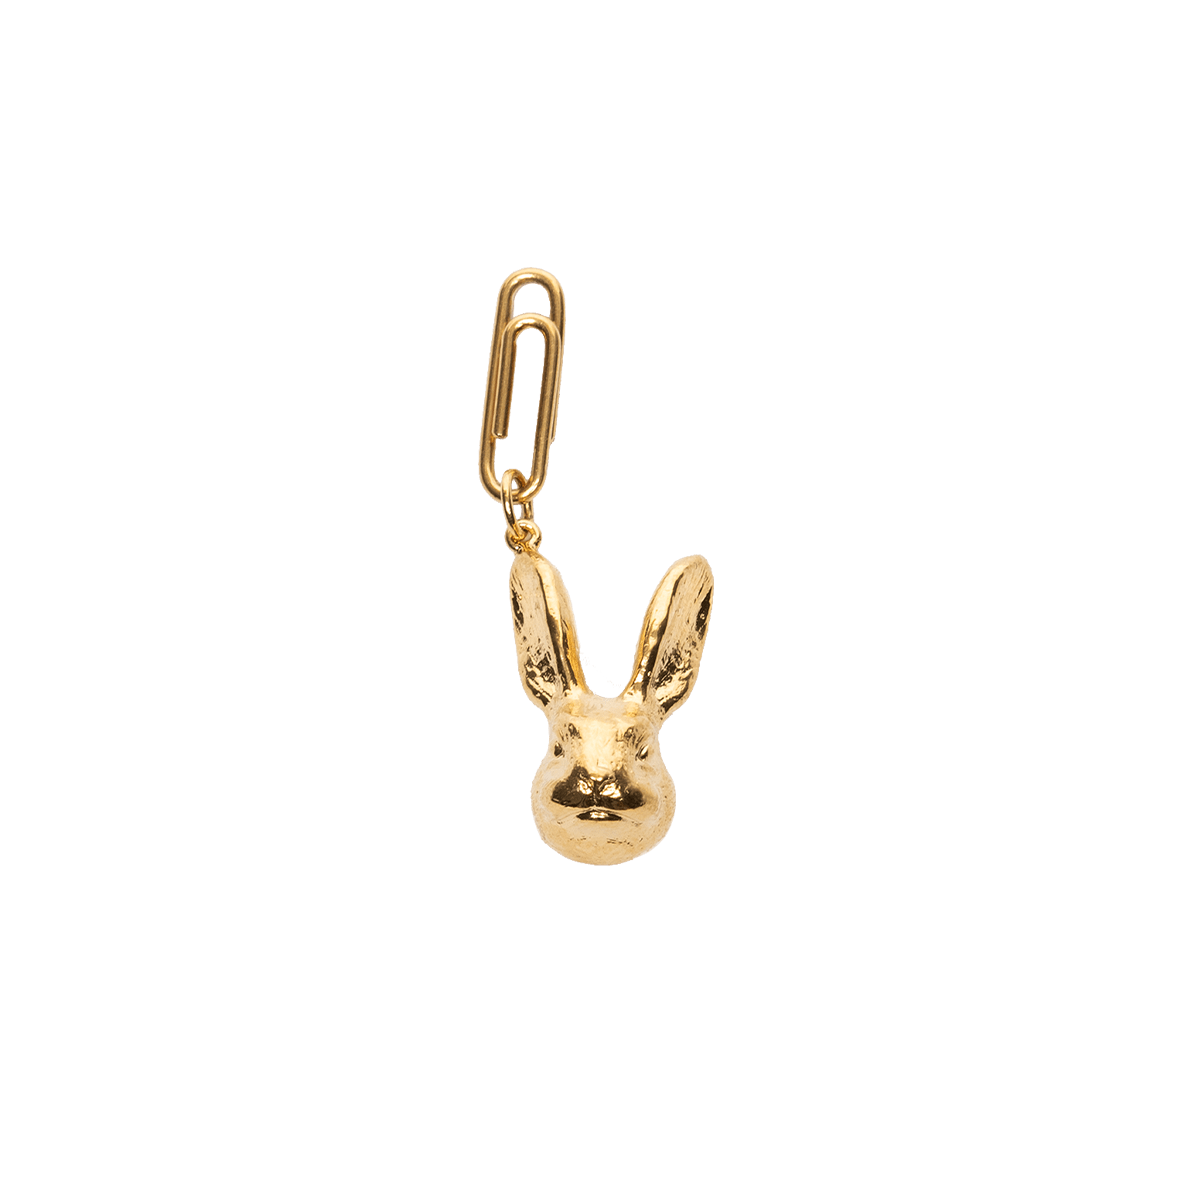 Penajewels Animals Charm Rabbit